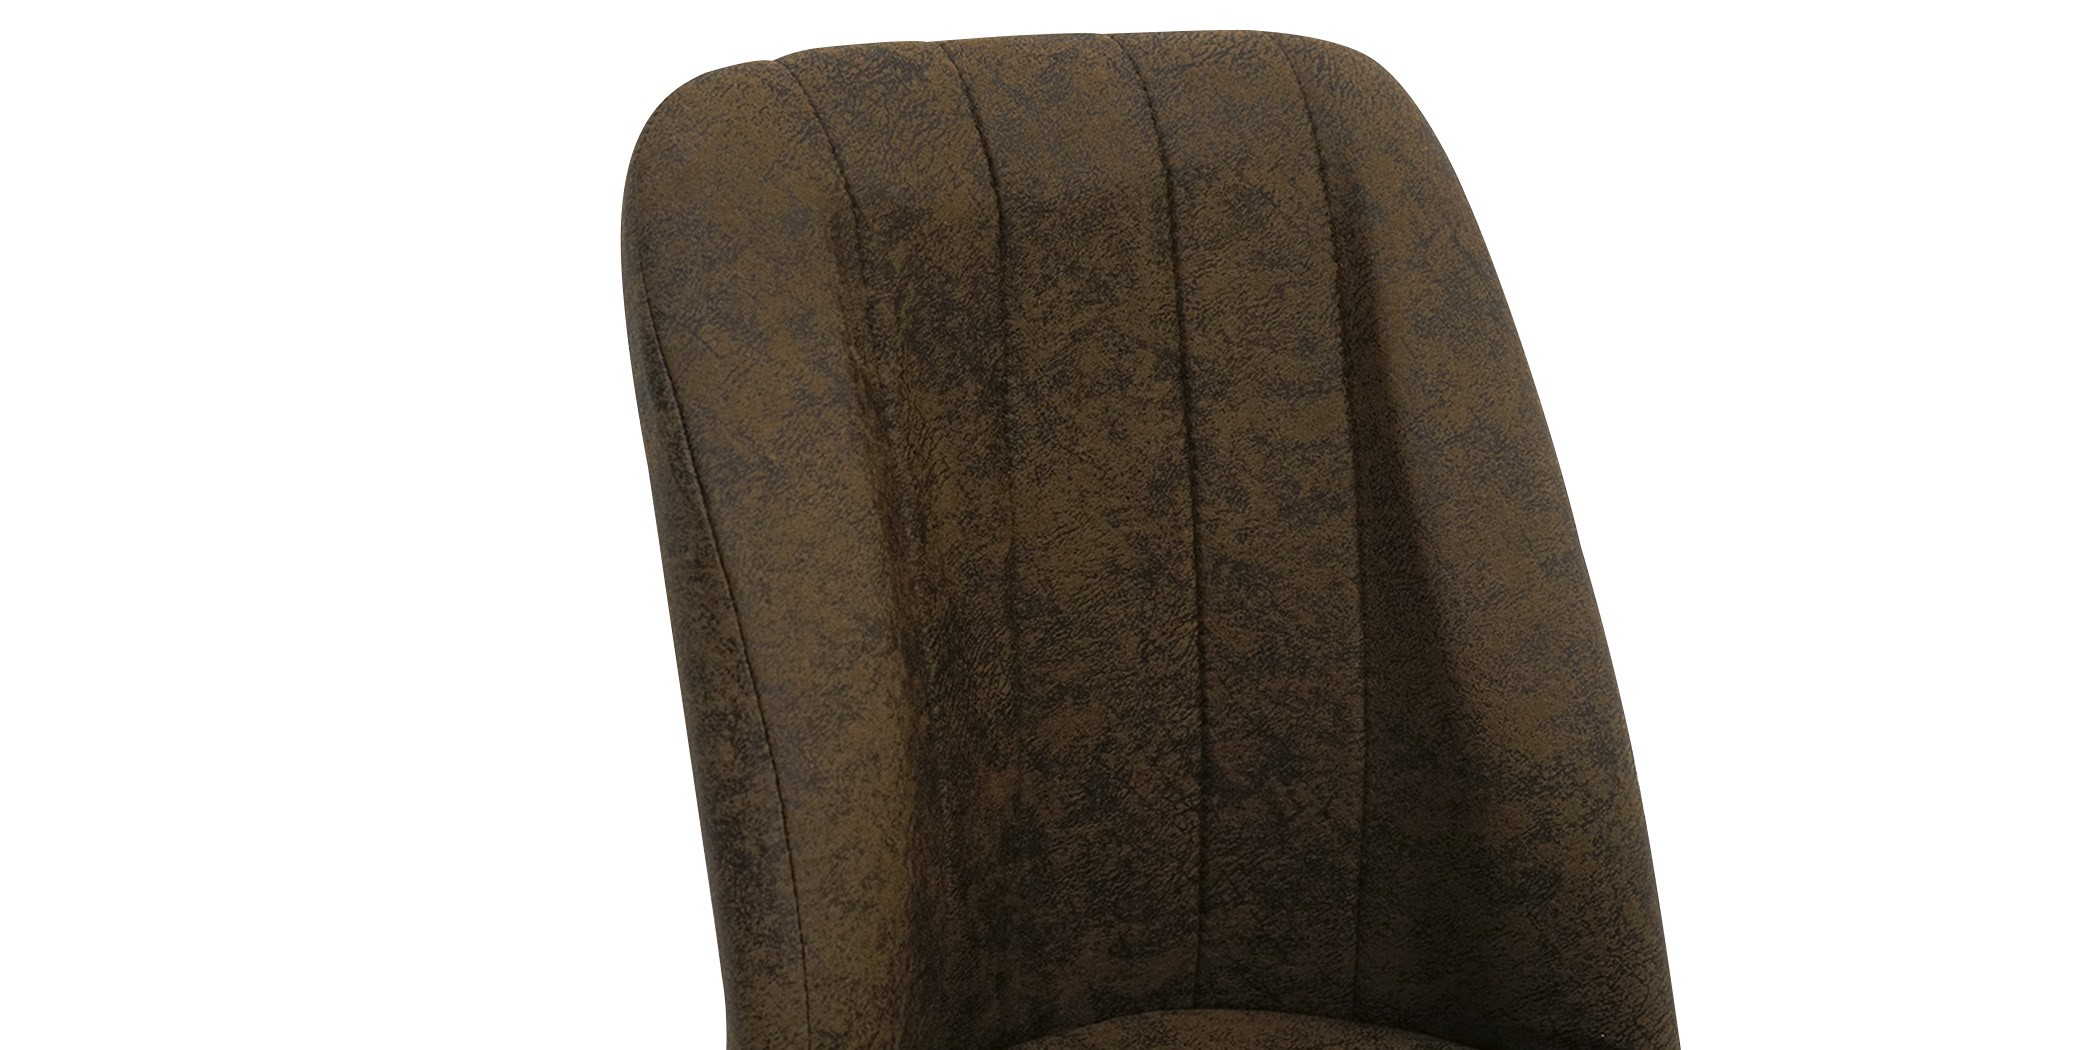 Asya Table & 6 Chairs Brown Fabric